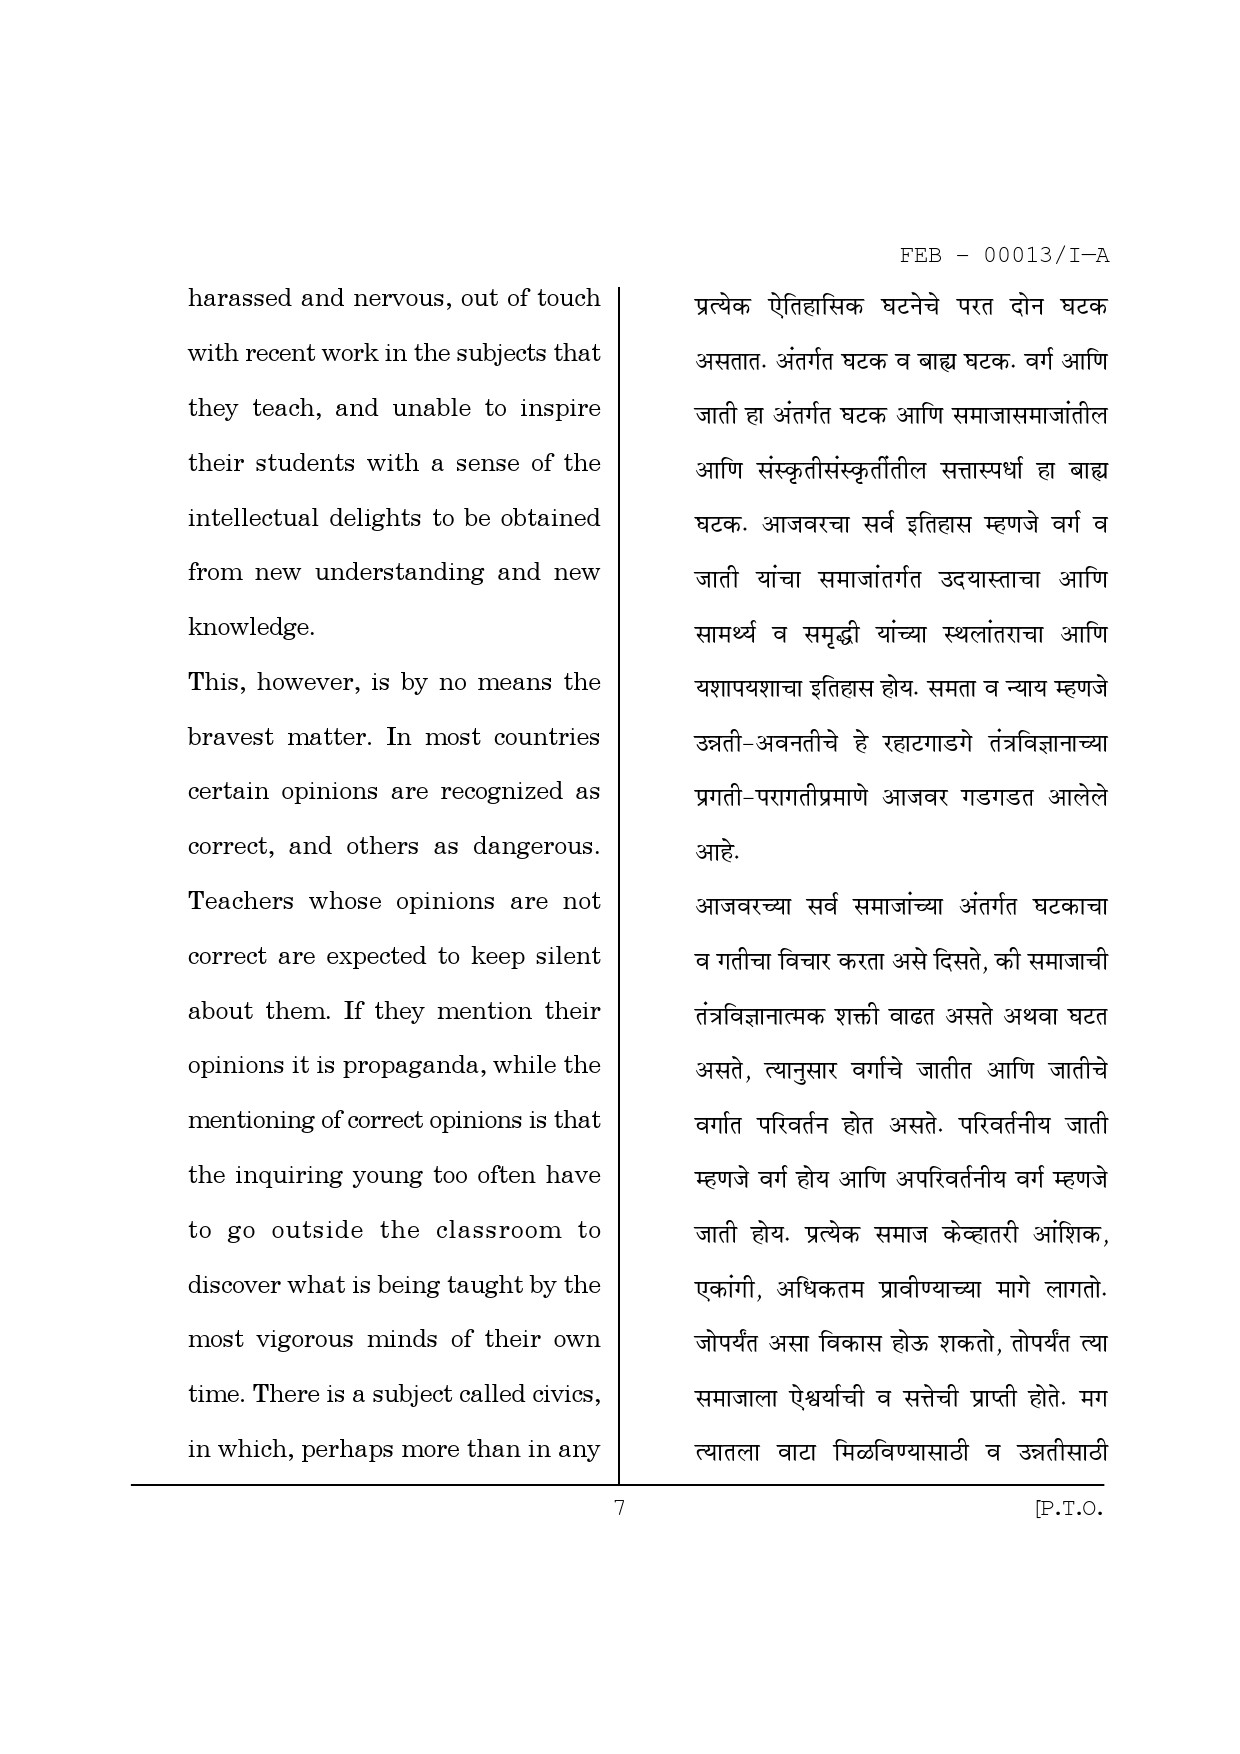 Maharashtra SET Paper I Question February 2013 7